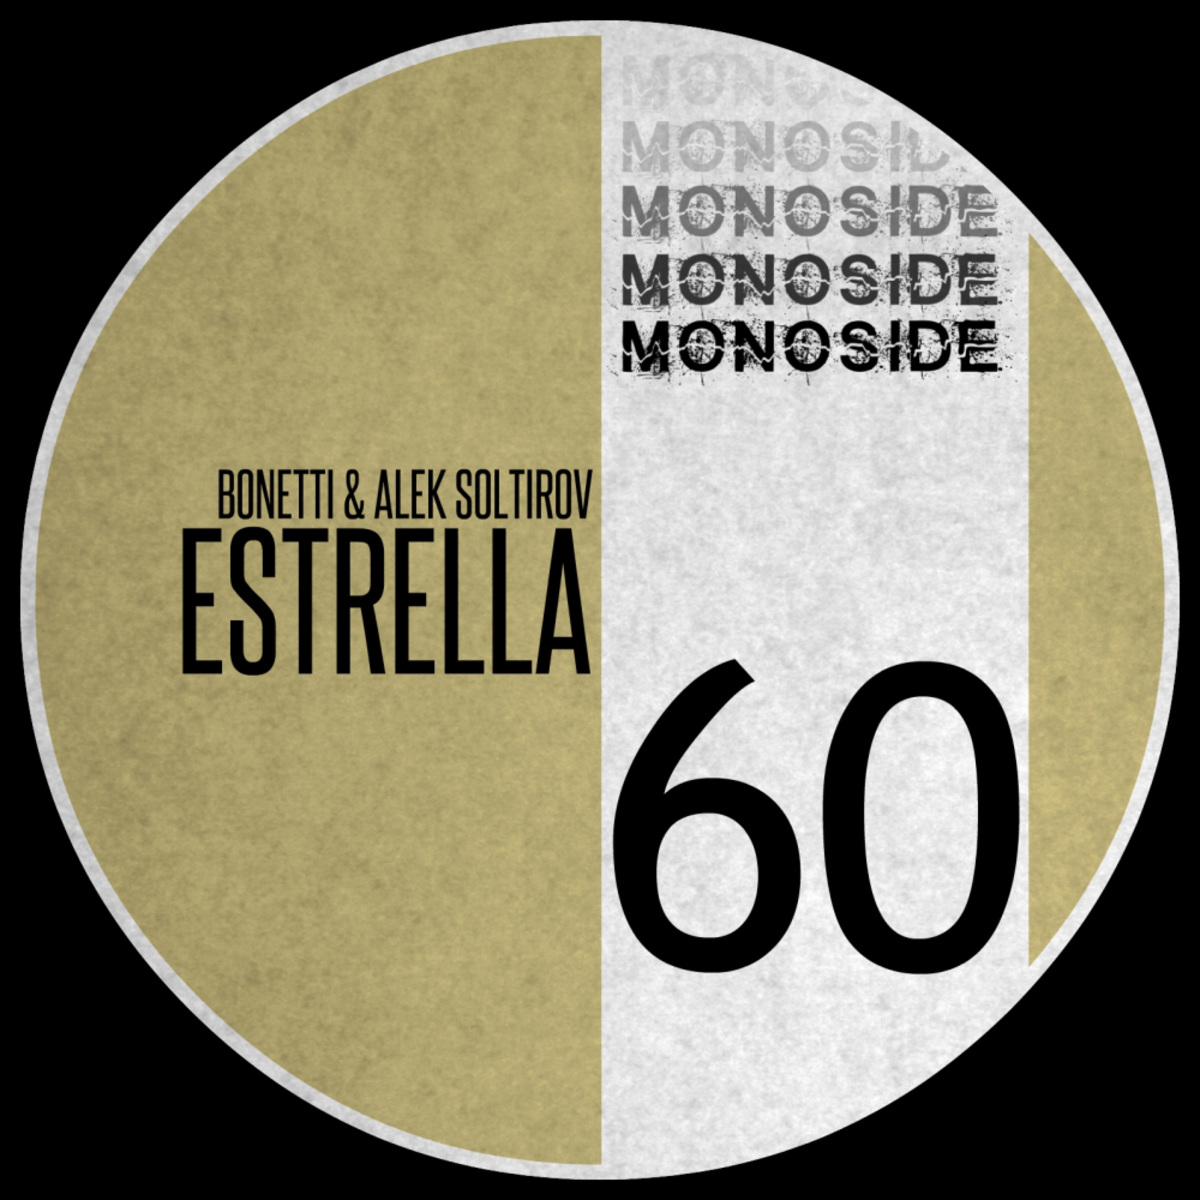 Bonetti & Alek Soltirov - Estrella / MONOSIDE